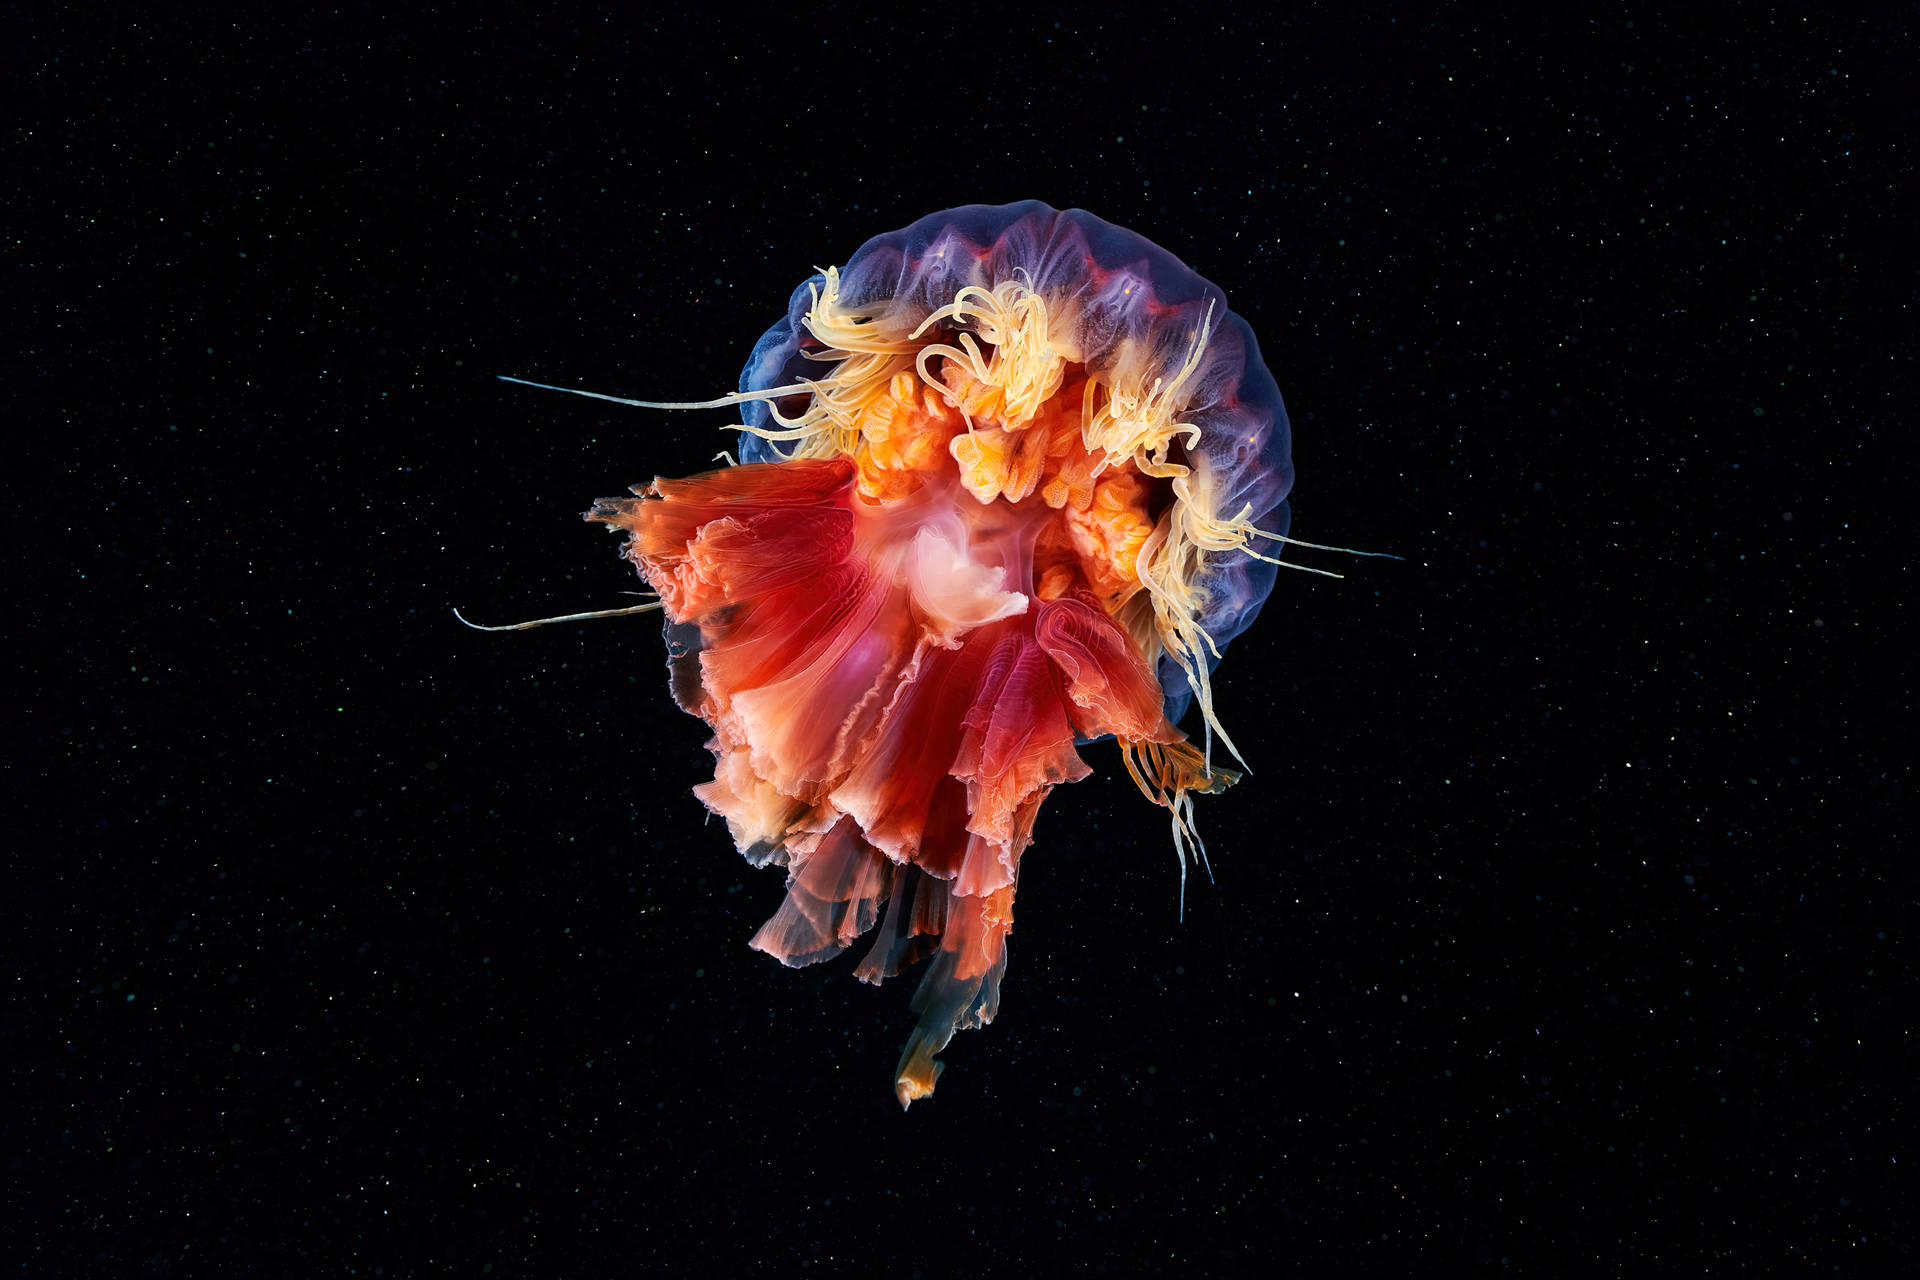 Jellyfish Art In Black Space